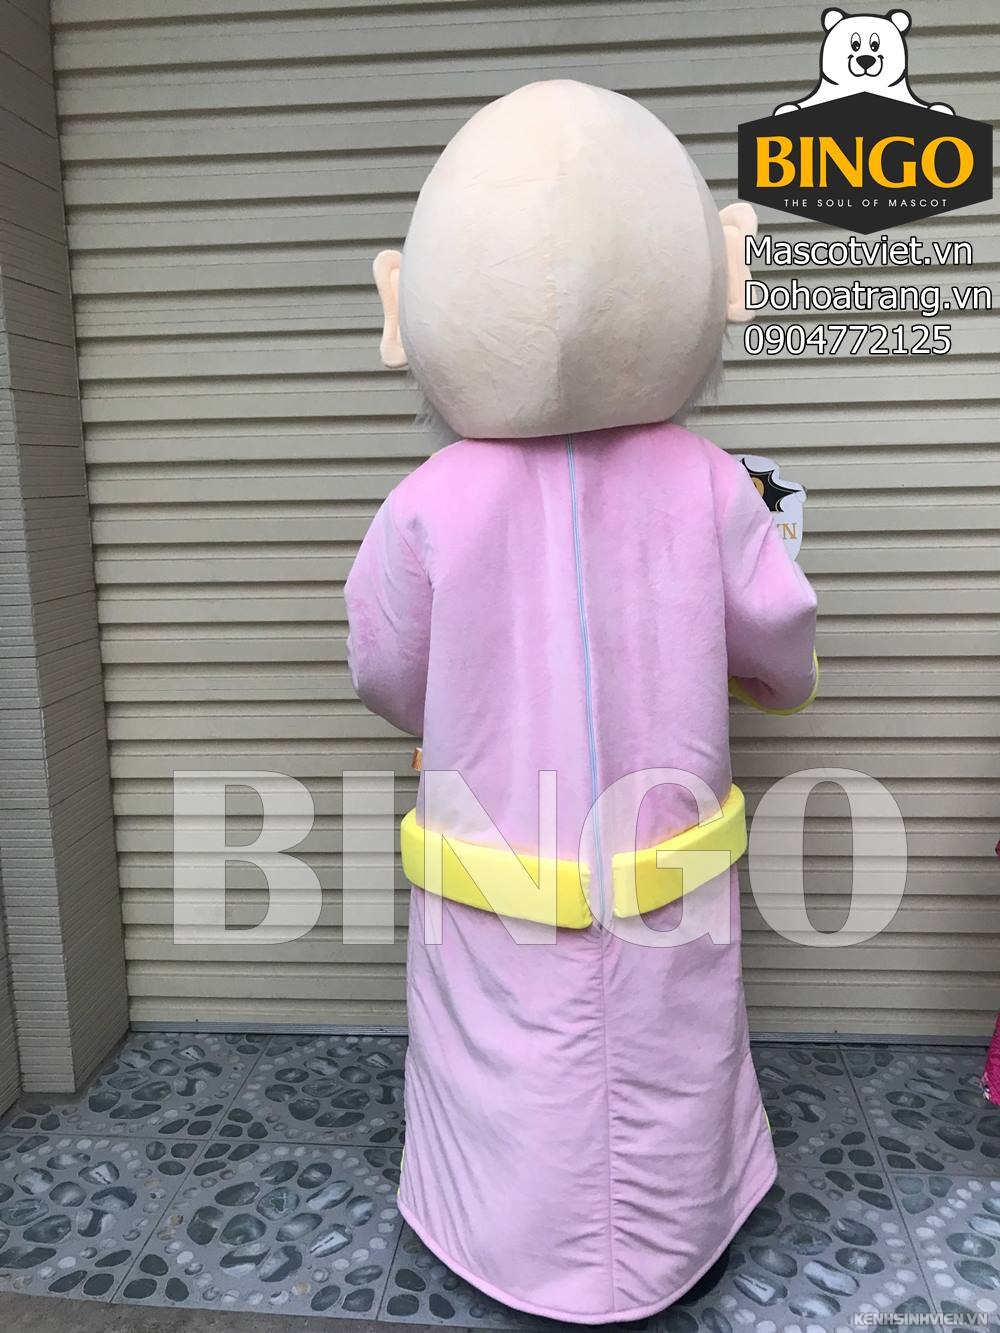 mascot-ong-tho-bingo-costumes-0904772125-2-.jpg